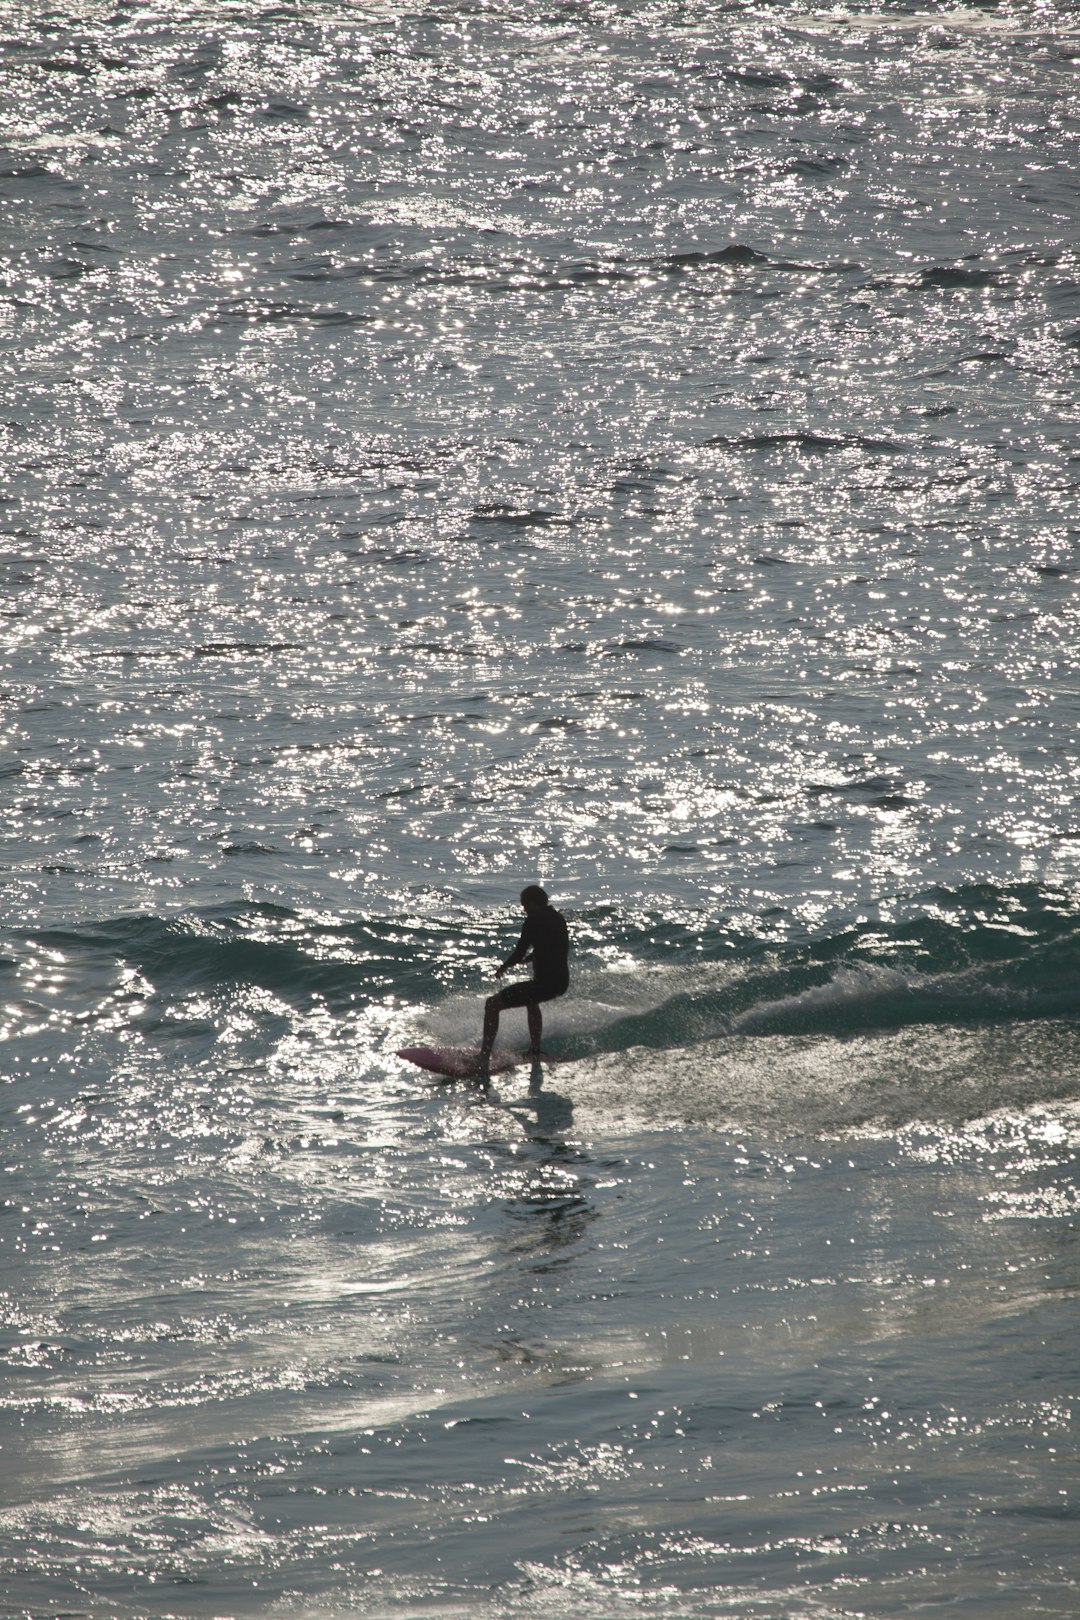 Surfing photo spot Tamarama Beach New South Wales